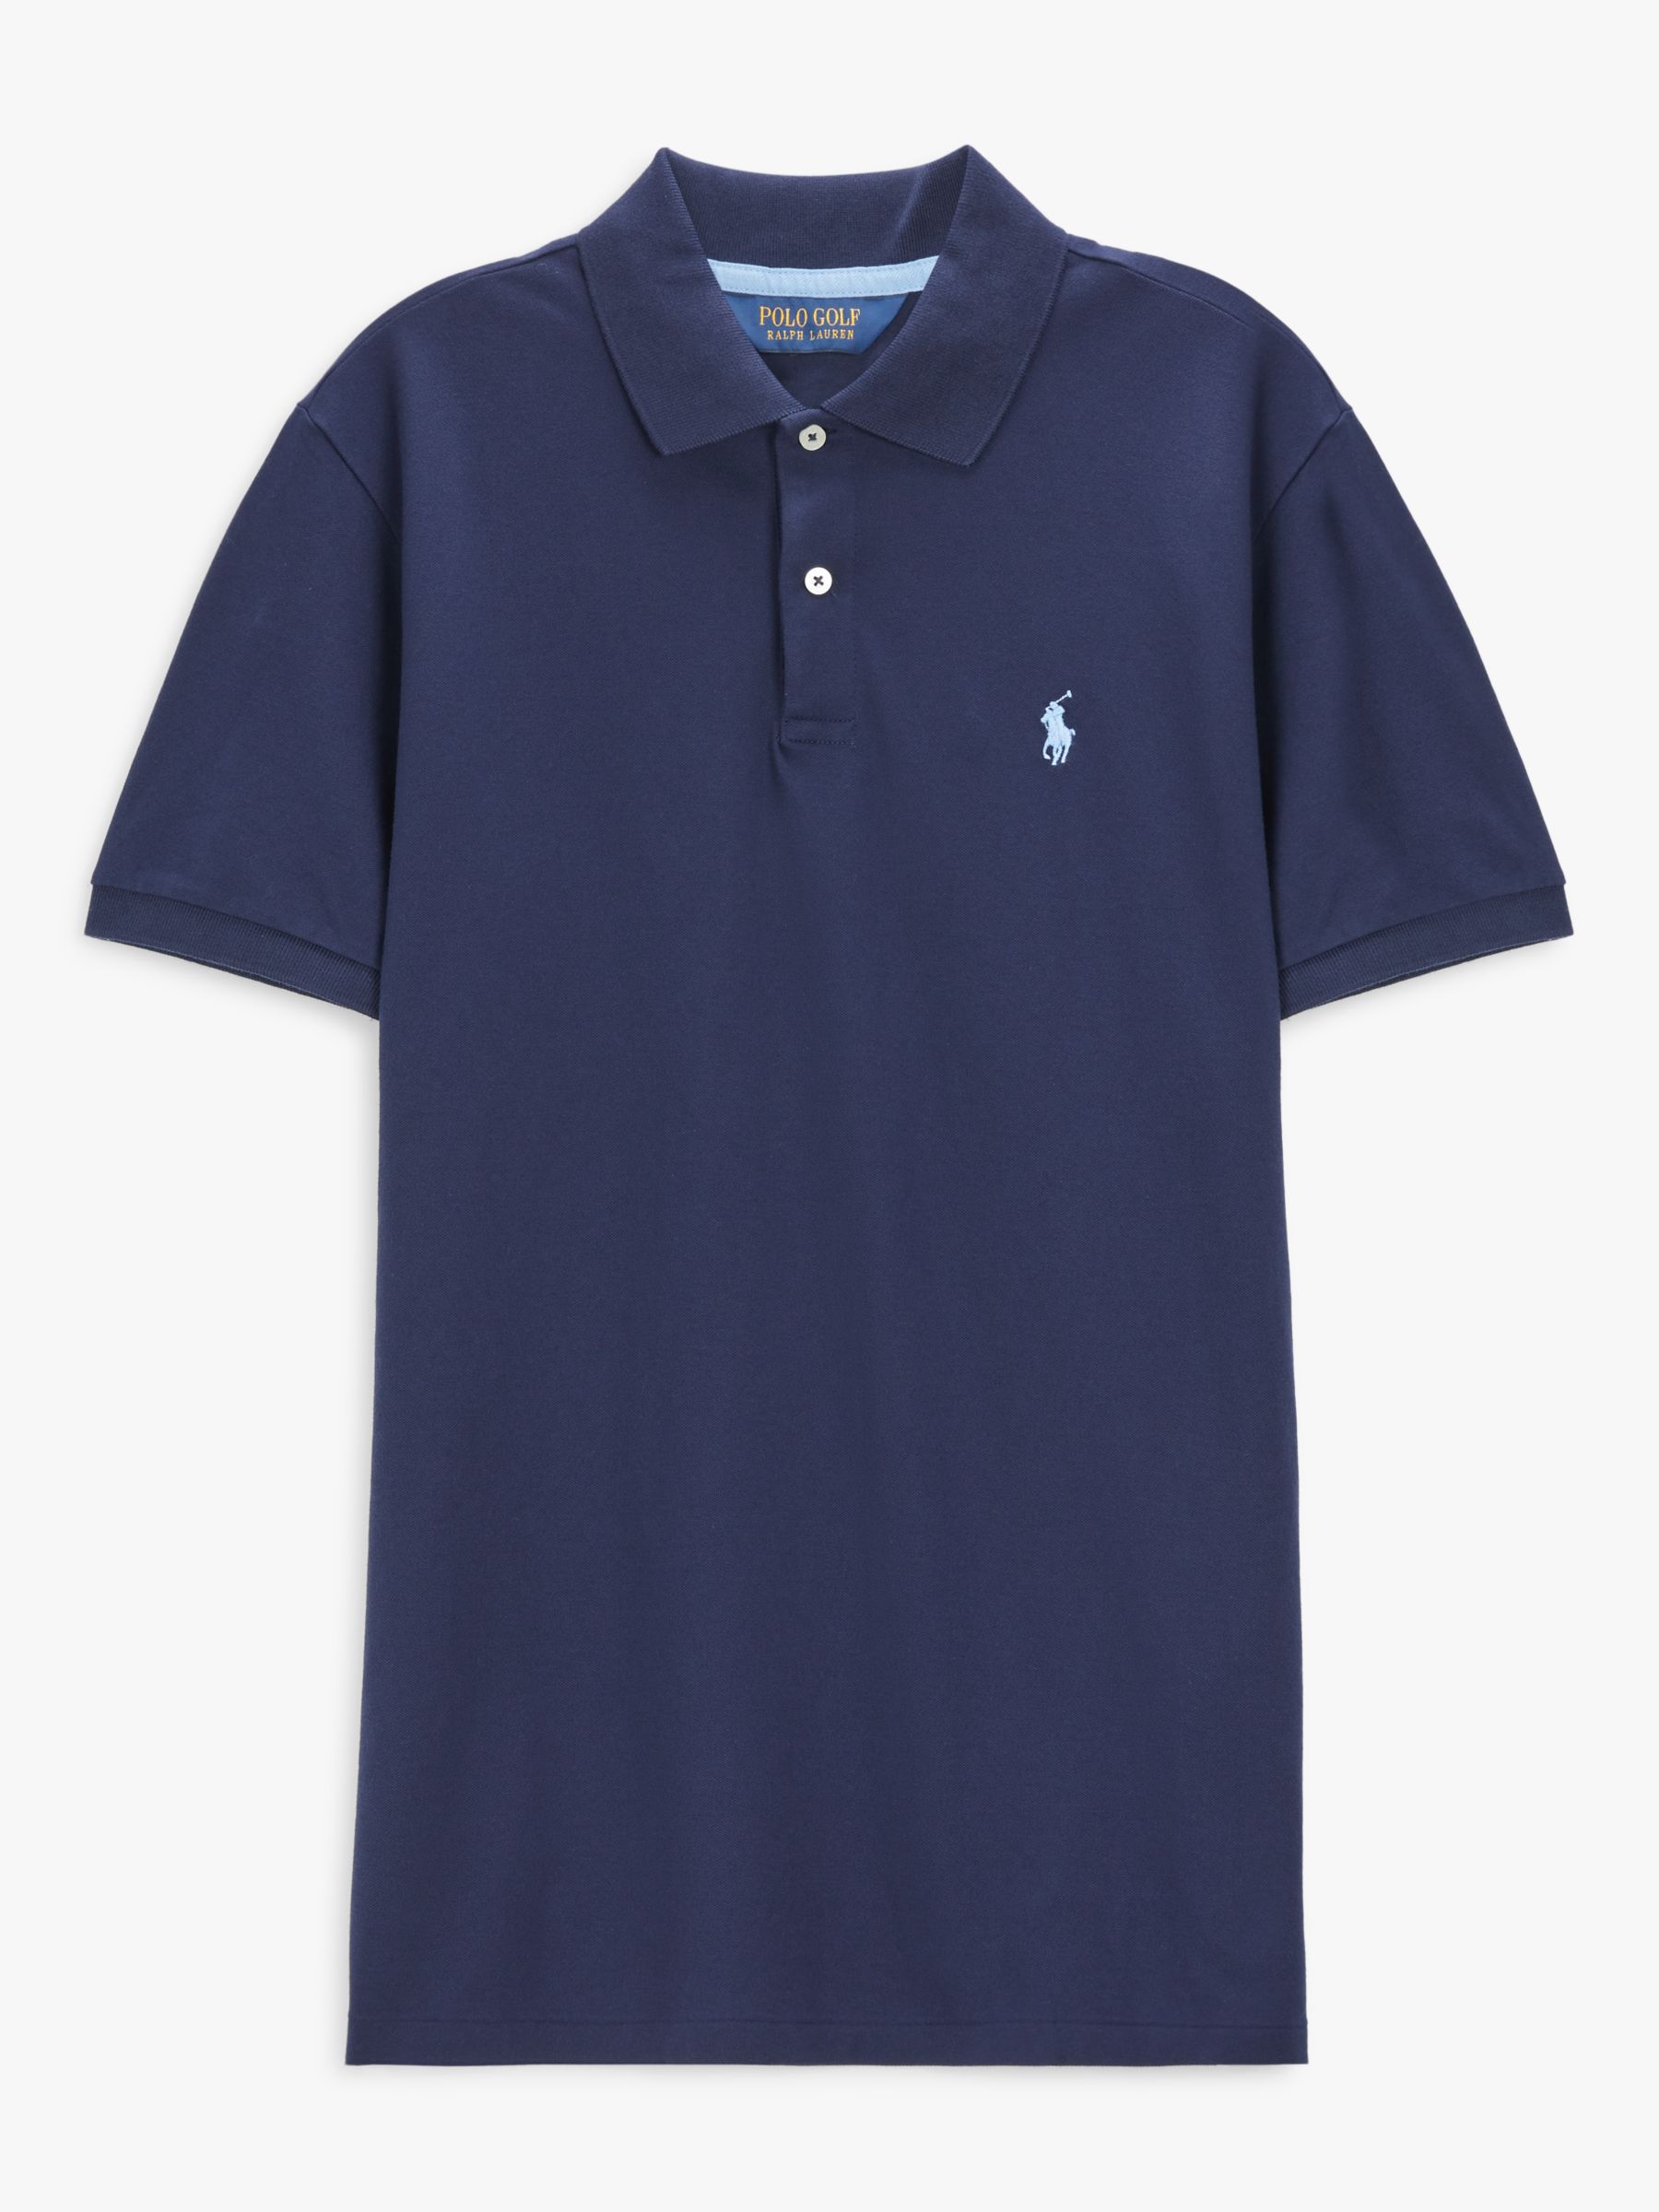 Polo Golf by Ralph Lauren Shirt Sleeve Polo Shirt, French Navy at John